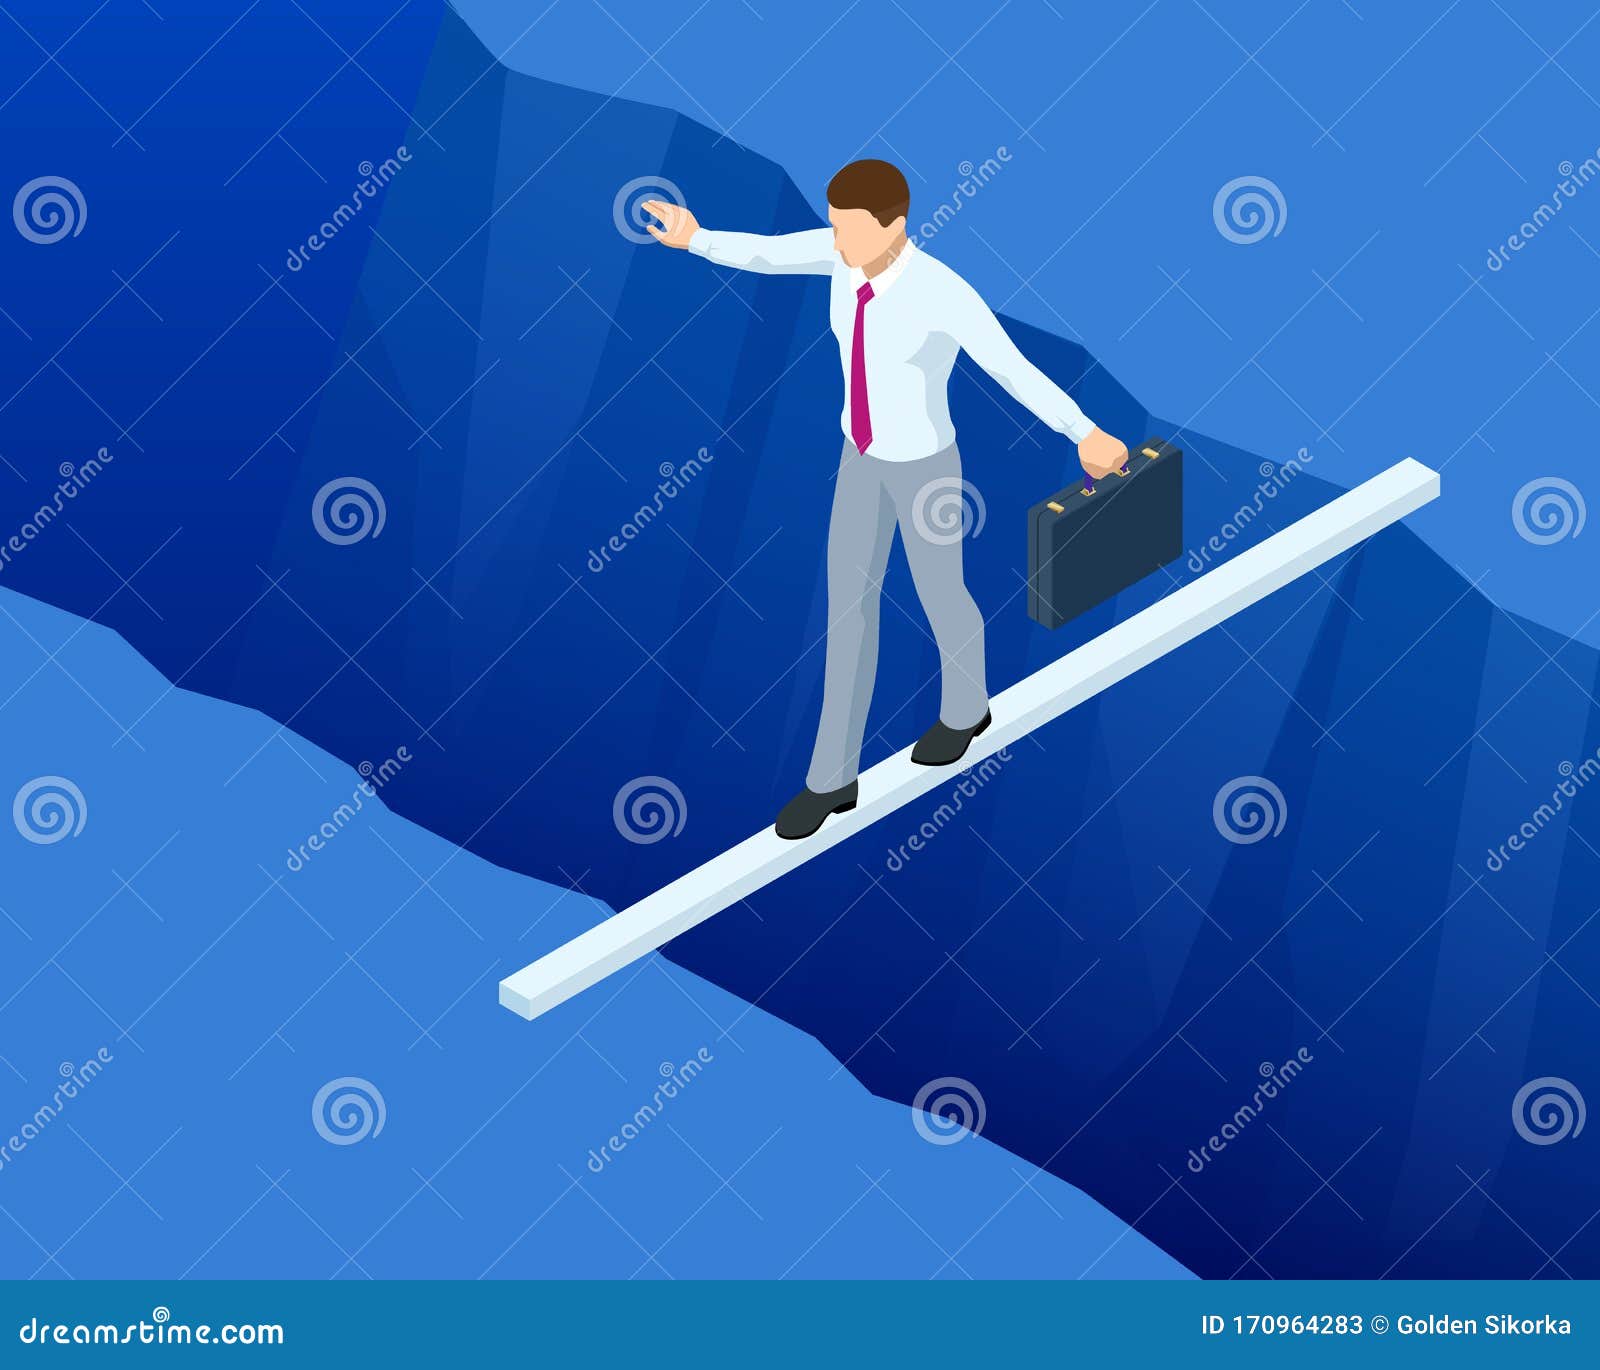 isometric businessman tightrope walker is on the rope. risk challenge in business, business risk, conquering adversity